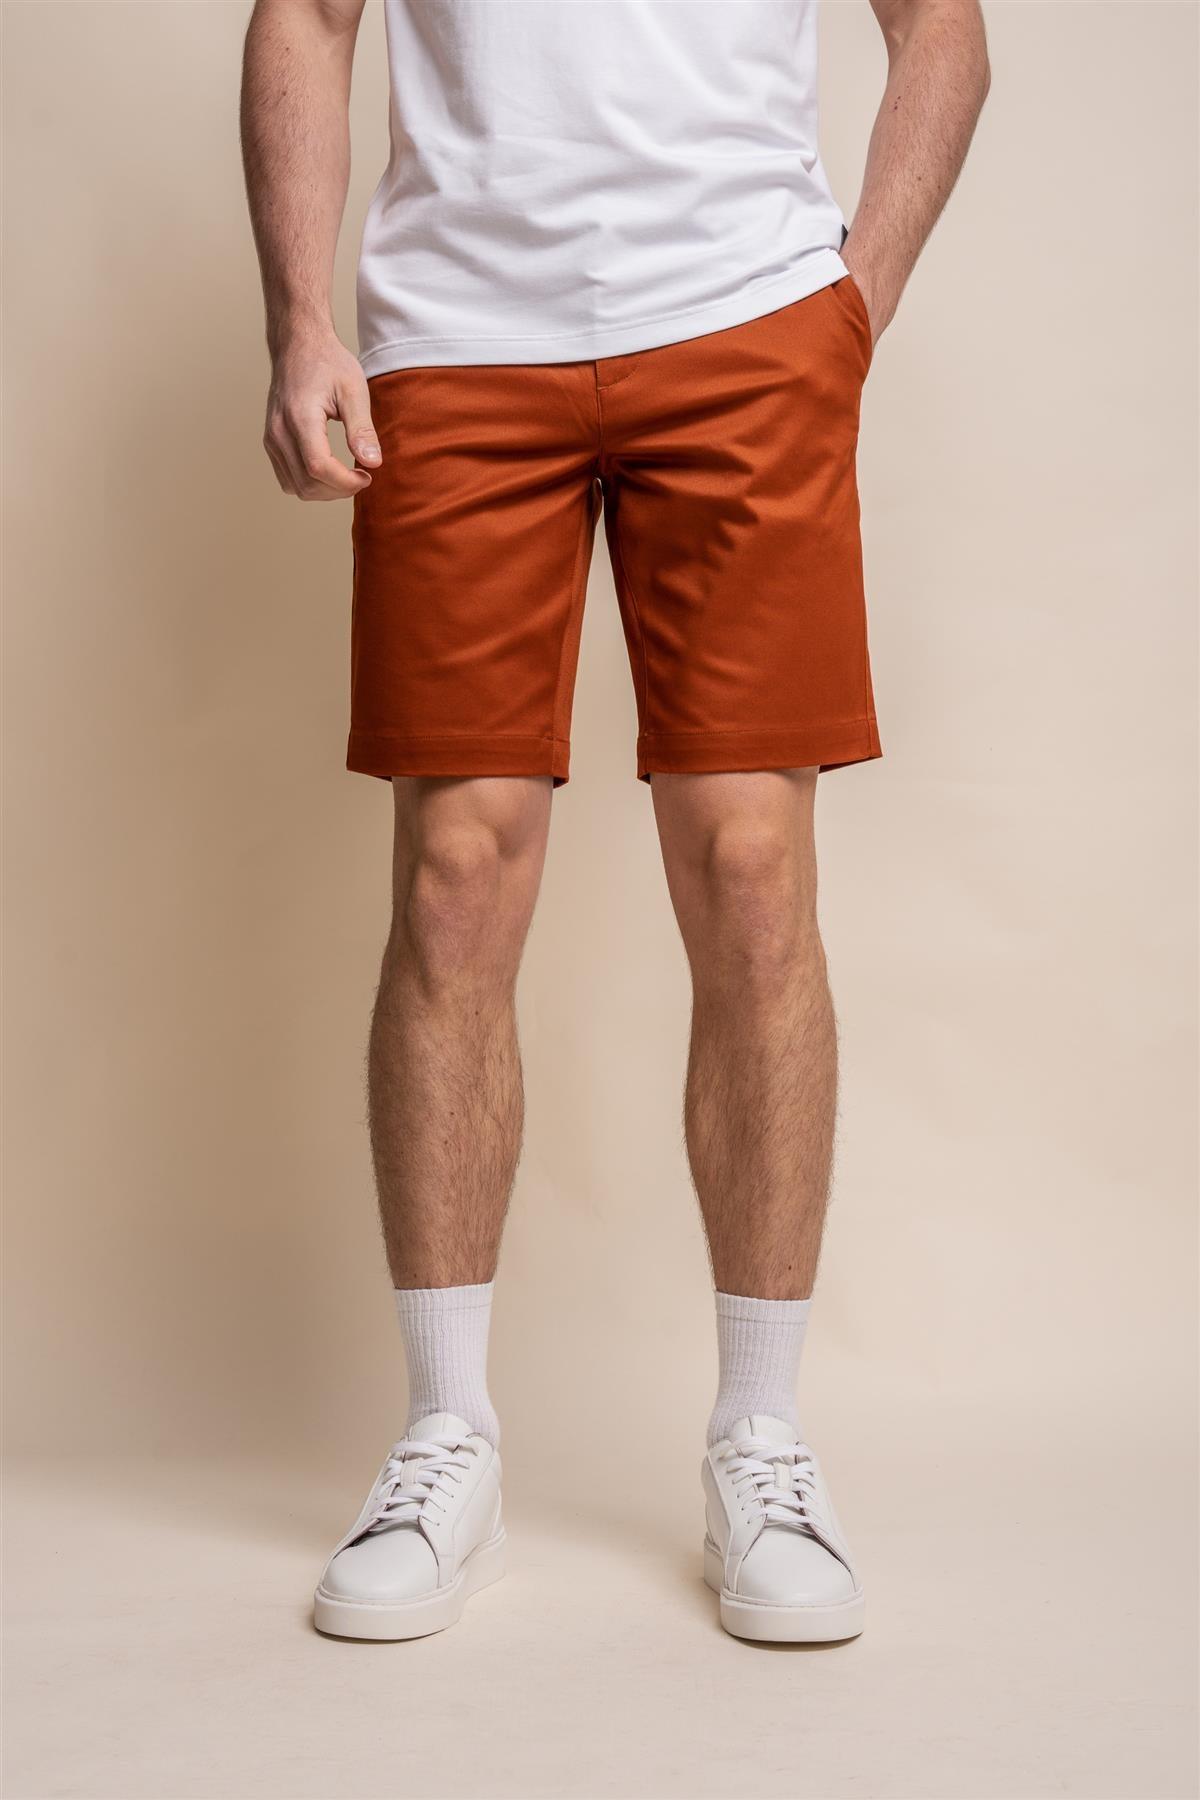 Dakota rust shorts front